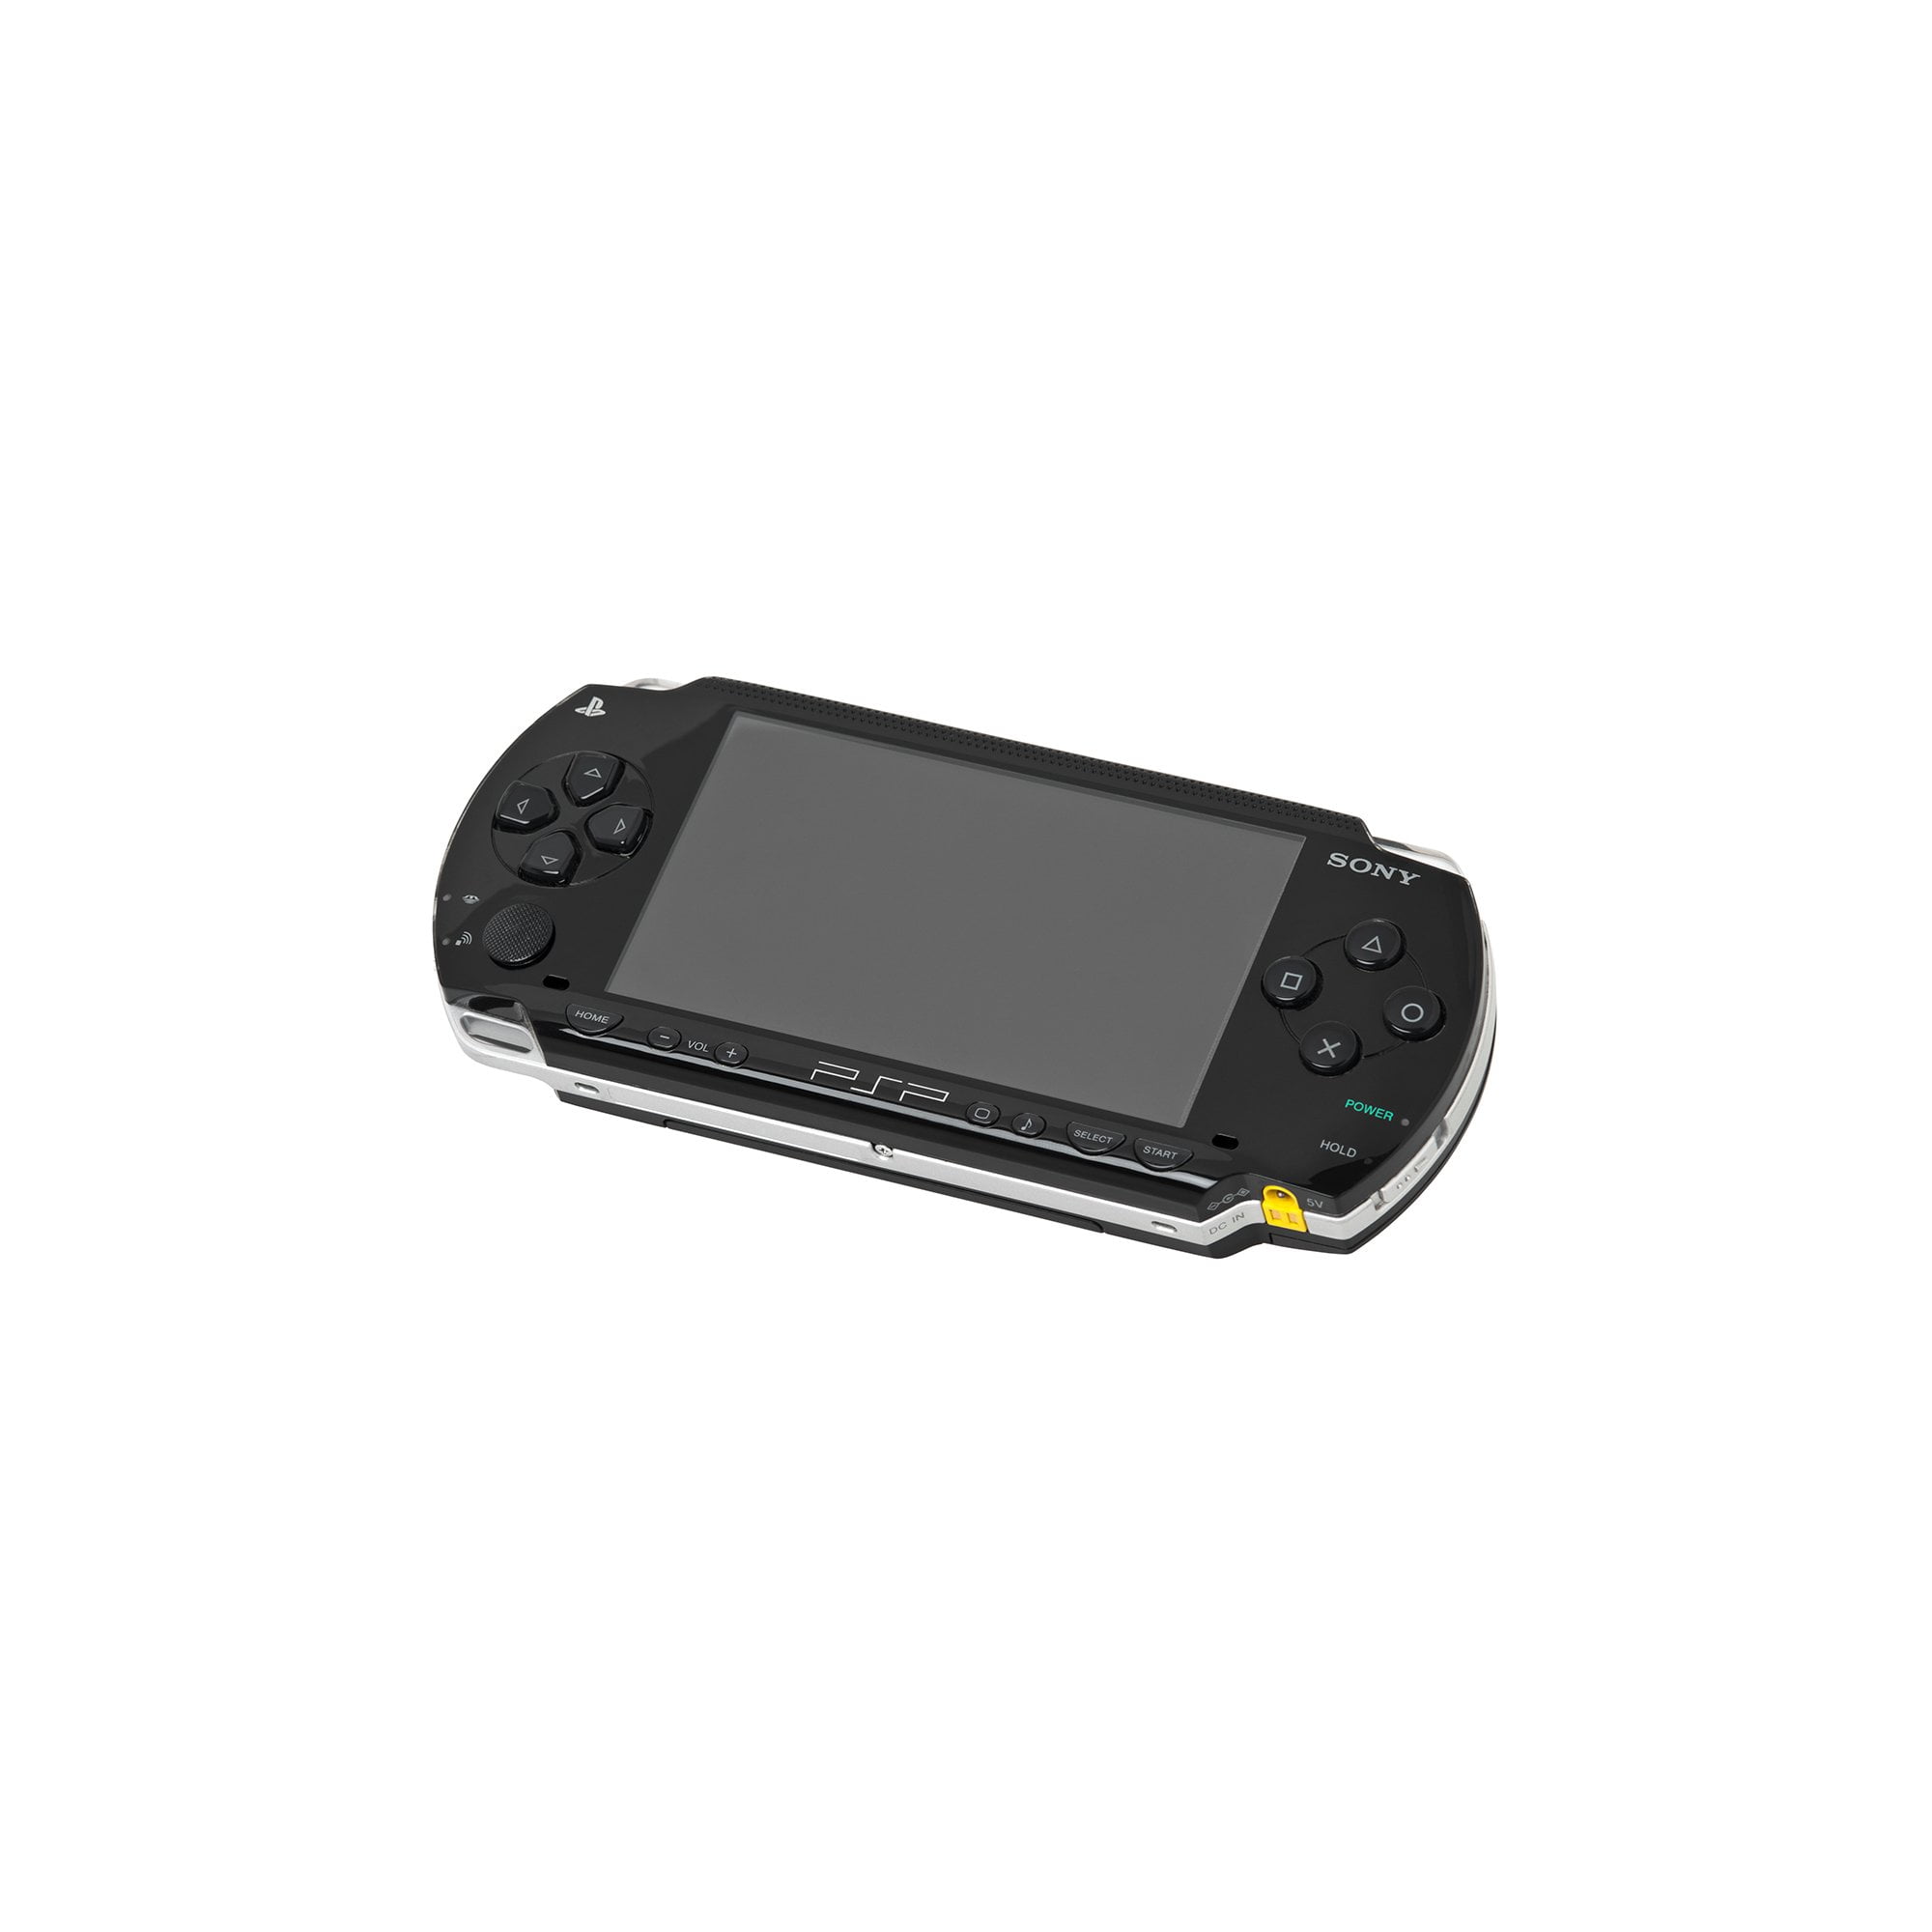 Sony PlayStation Portable Black PSP-1000 Handheld System